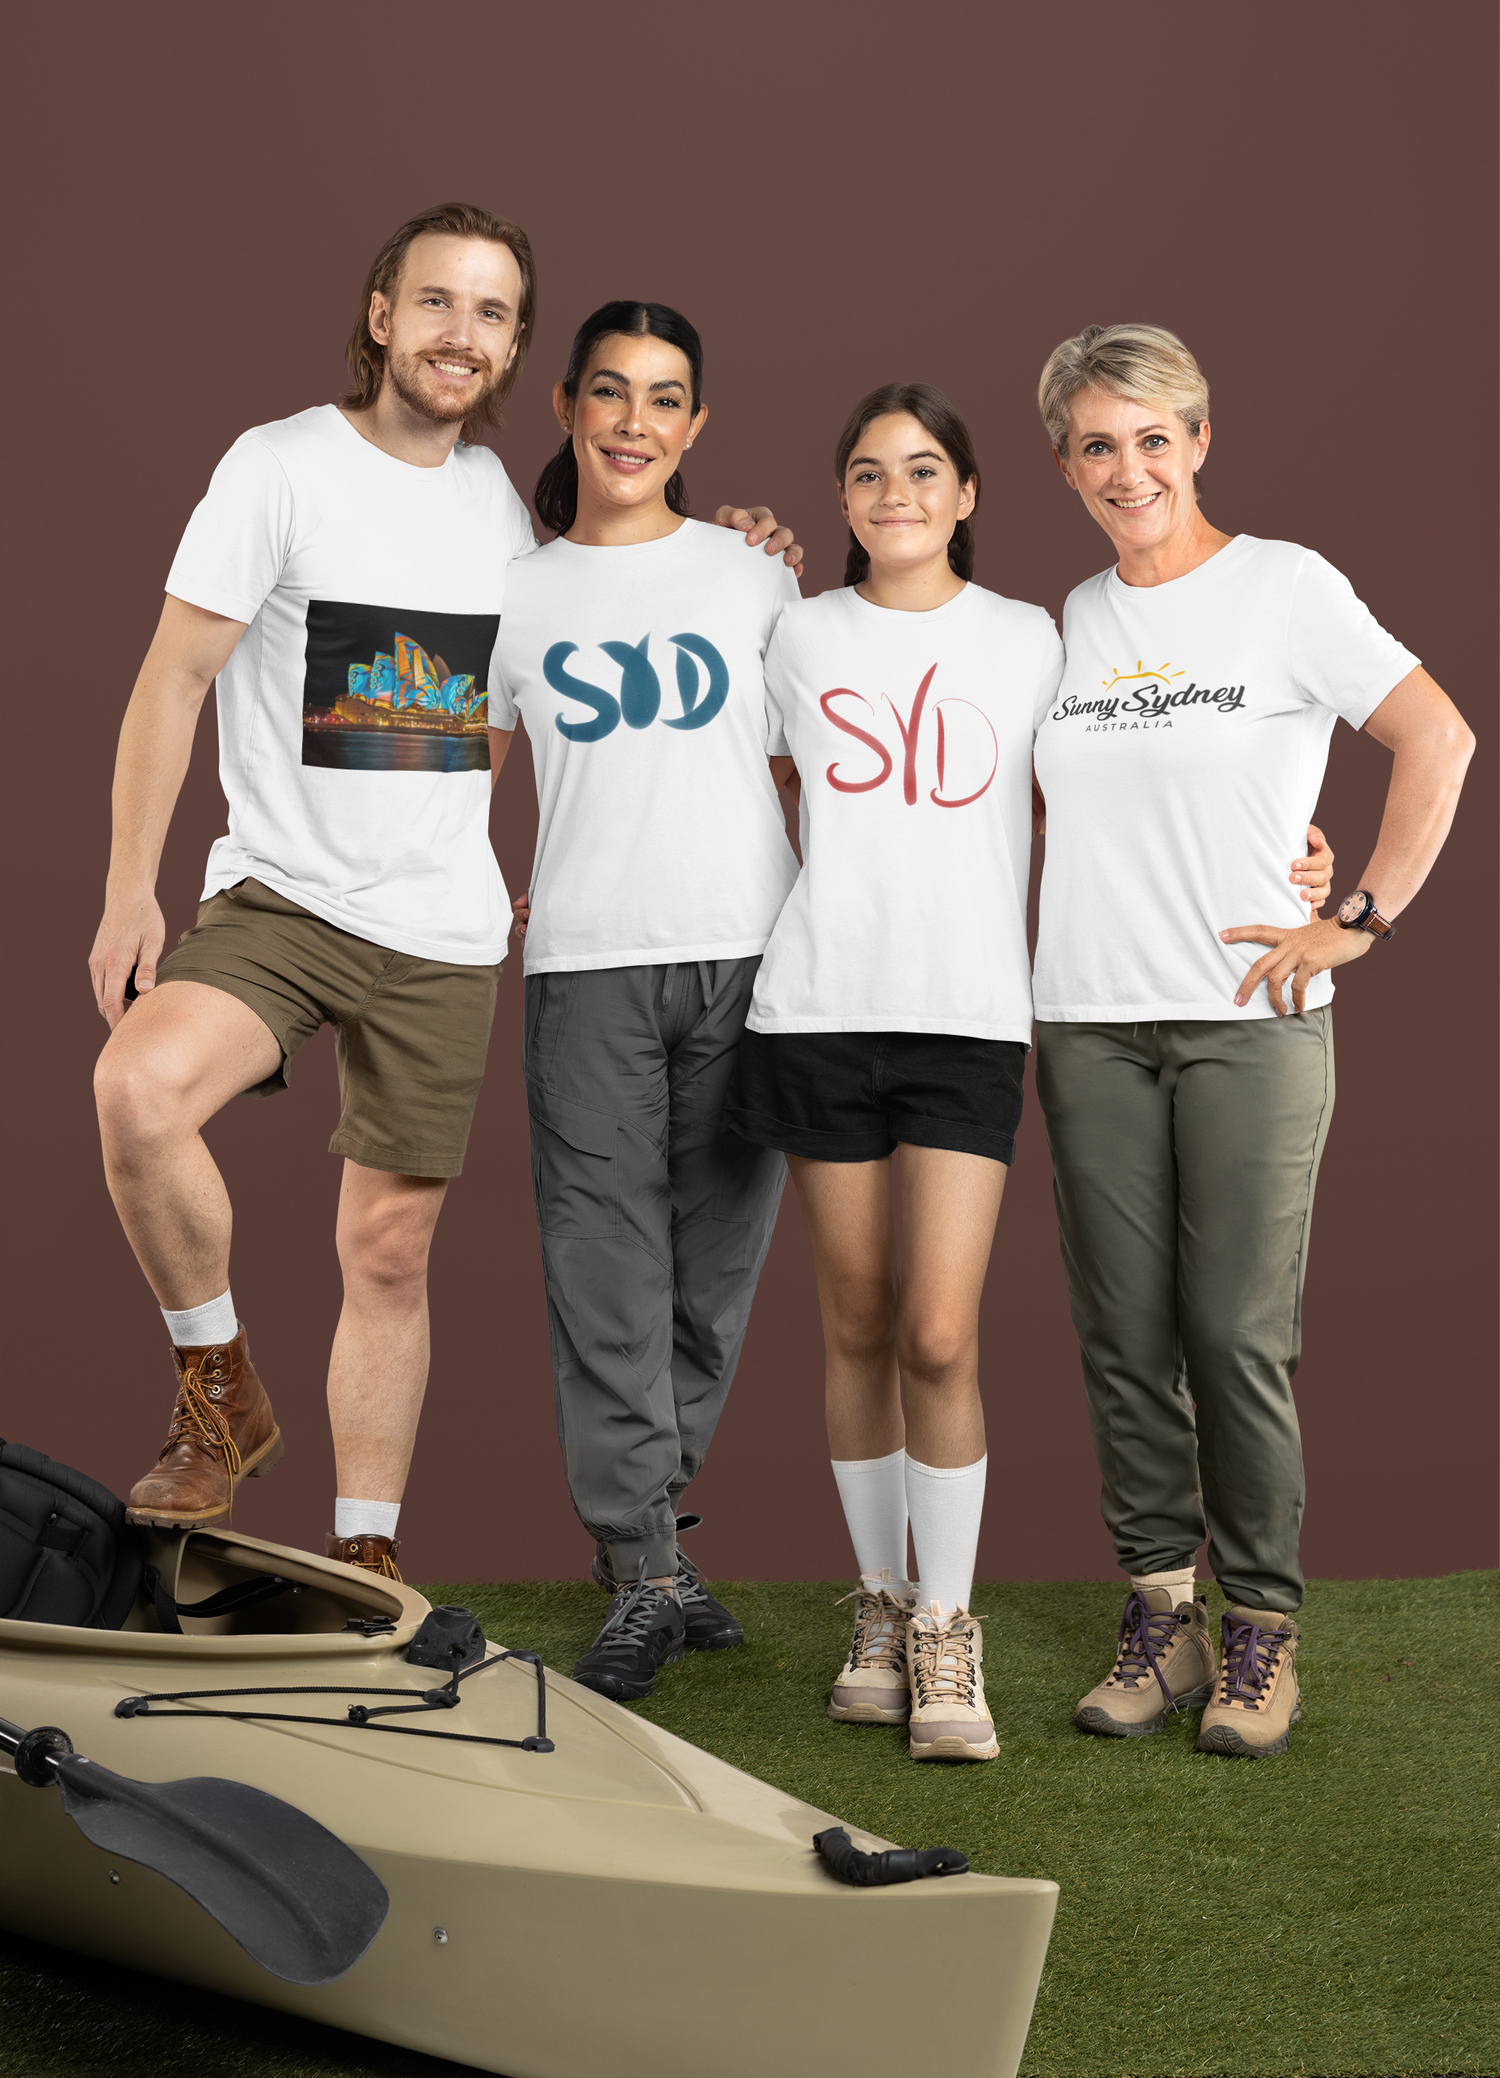 Sydney t'shirts - Sunny Sydney Australia Design